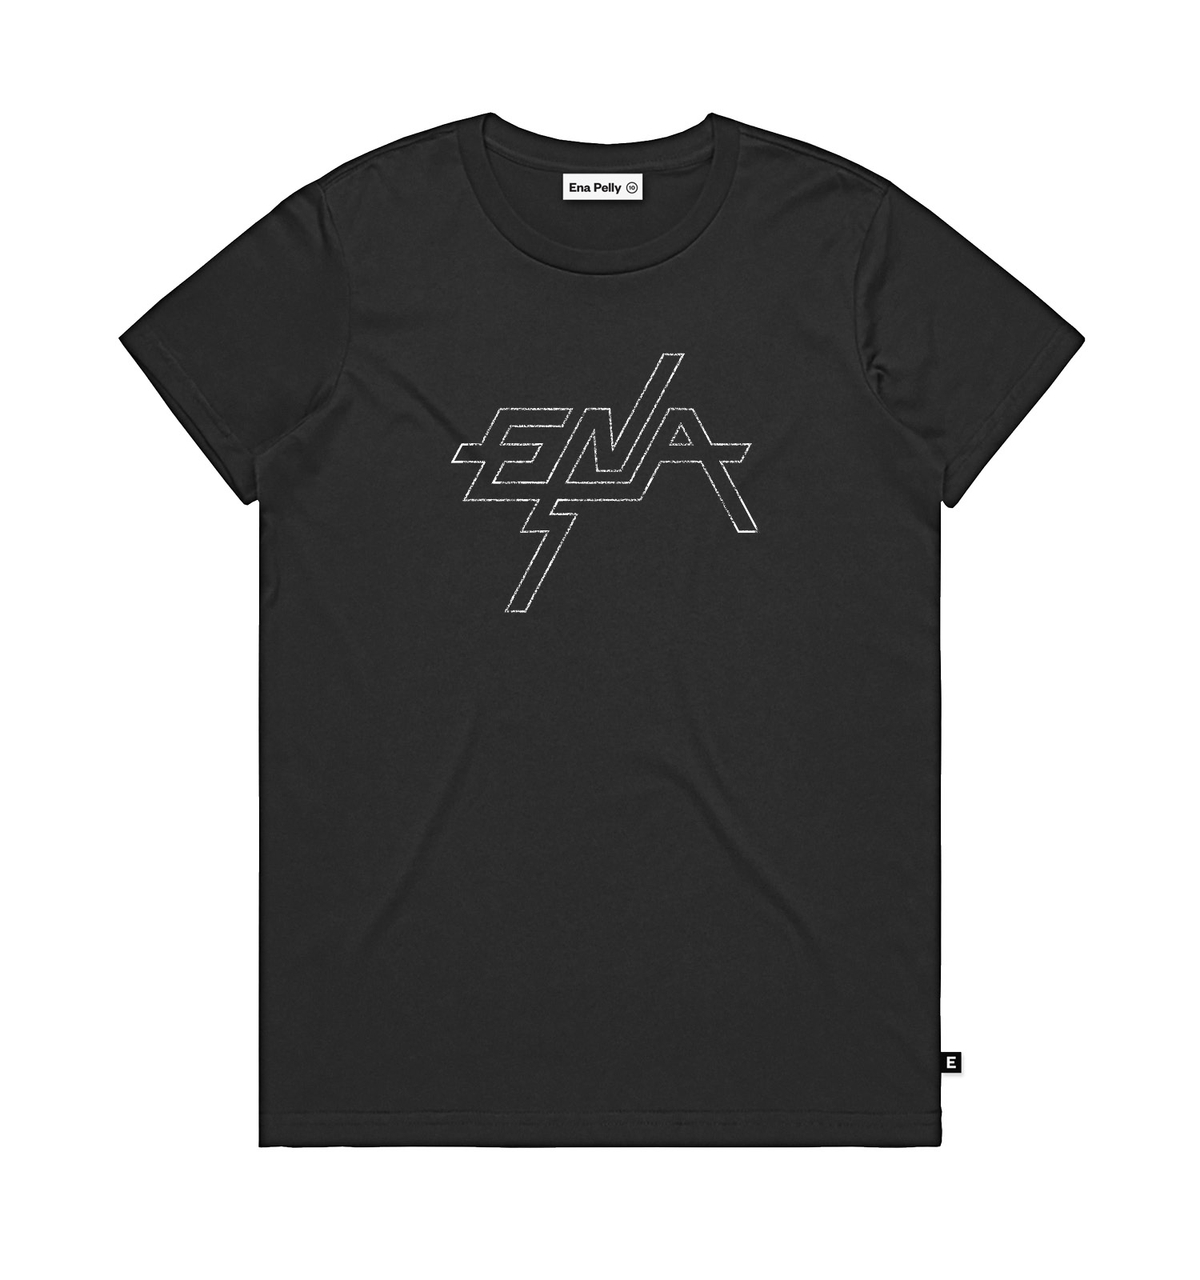 Ena Pelly - Lightning Wordmark T-Shirt Graphic | Atollon - a design company